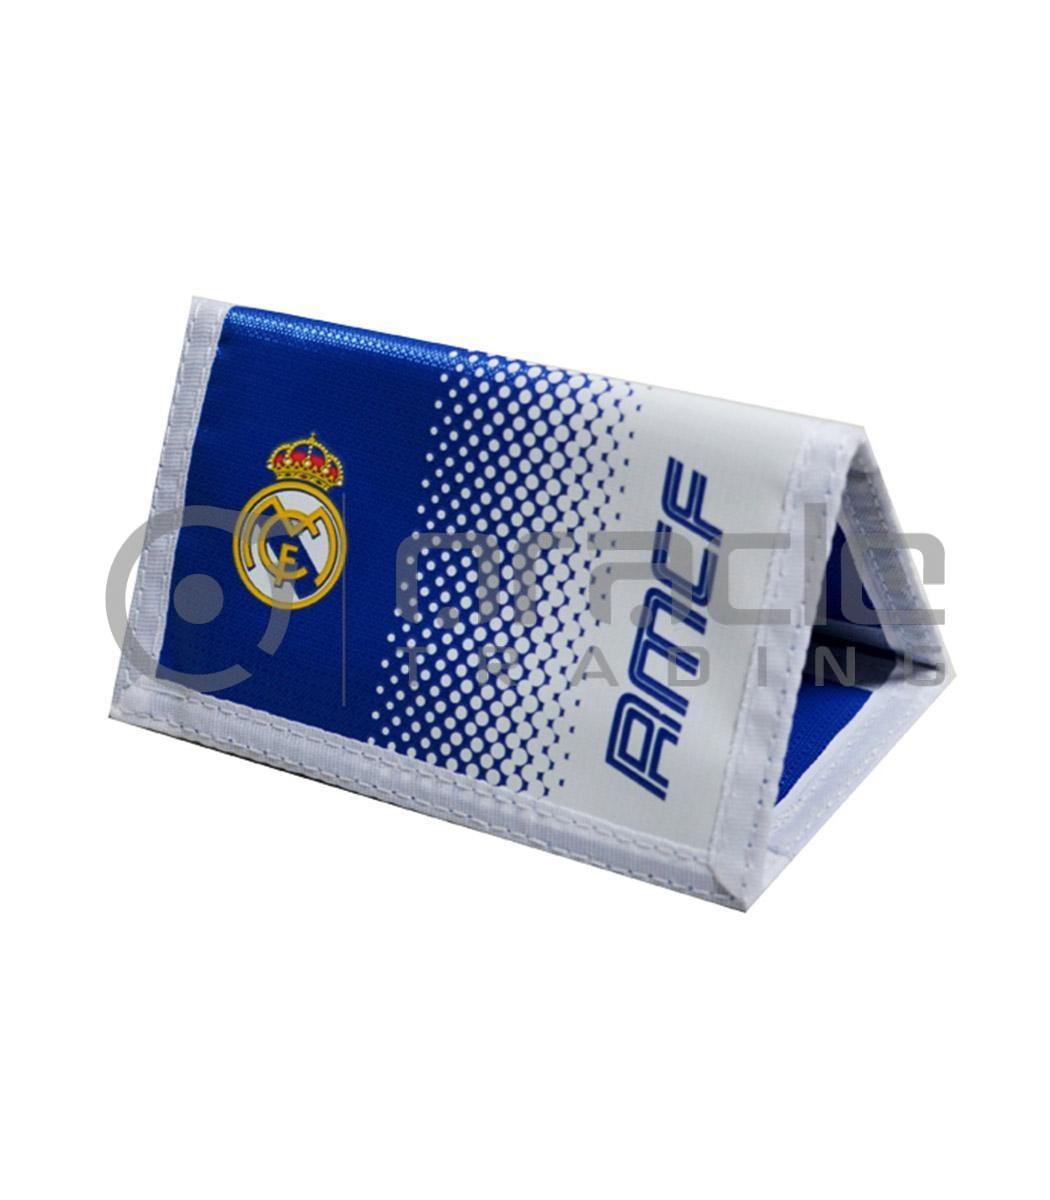 Real Madrid Crest Wallet